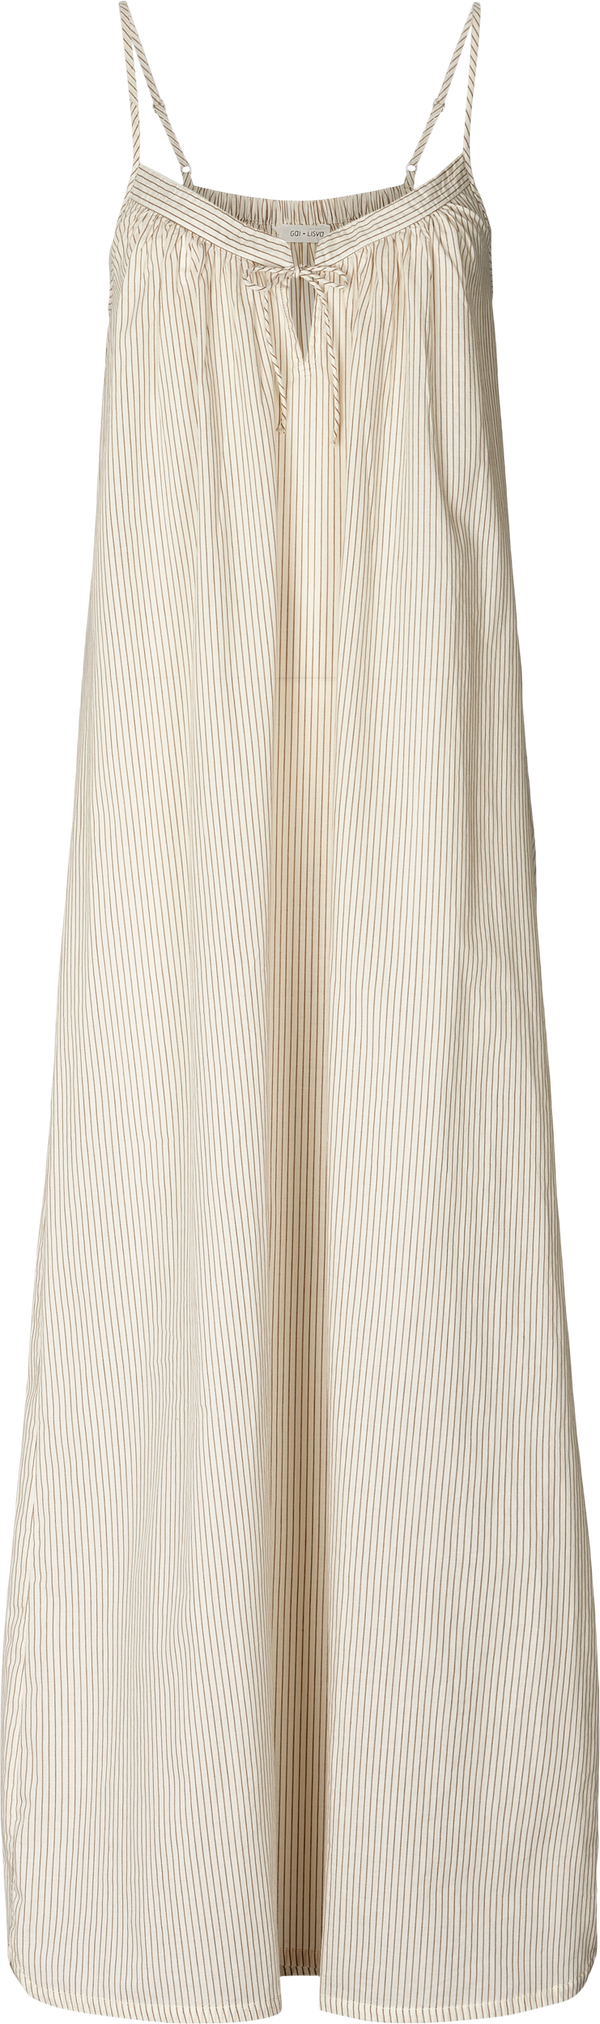 GAI+LISVA Julia Dress Cotton Stripe Dresses & Skirts 178 Brown Mustard